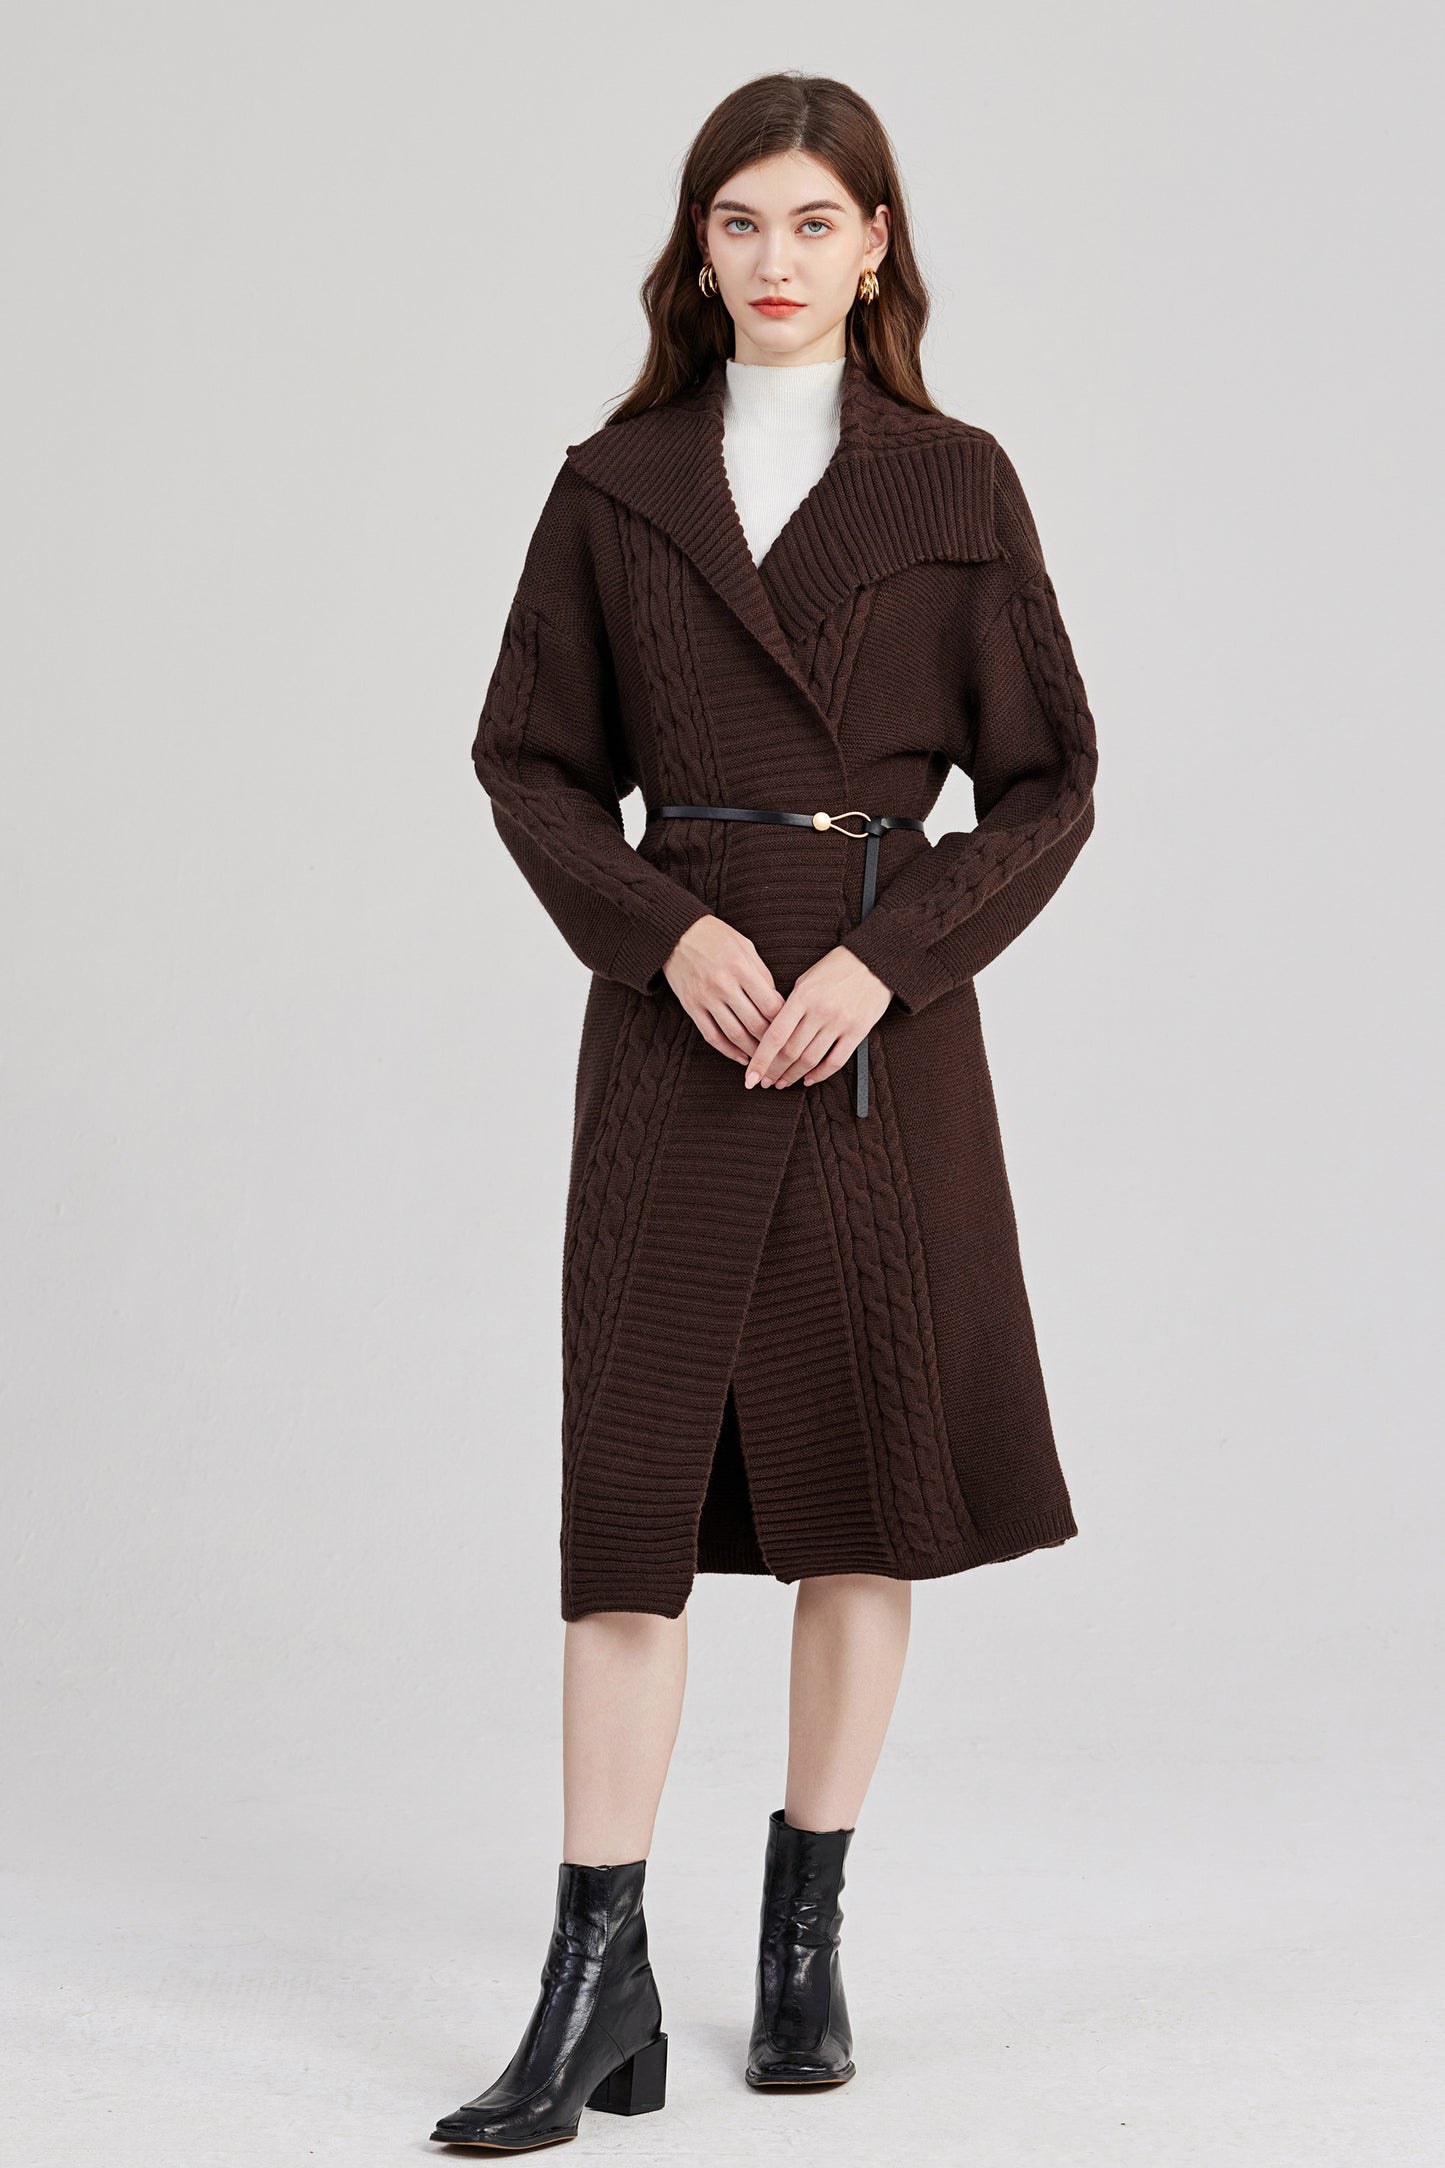 Women's Knit Cardigan Long Sleeve Lapel Casual Solid Classy Sweater Jacket Coat